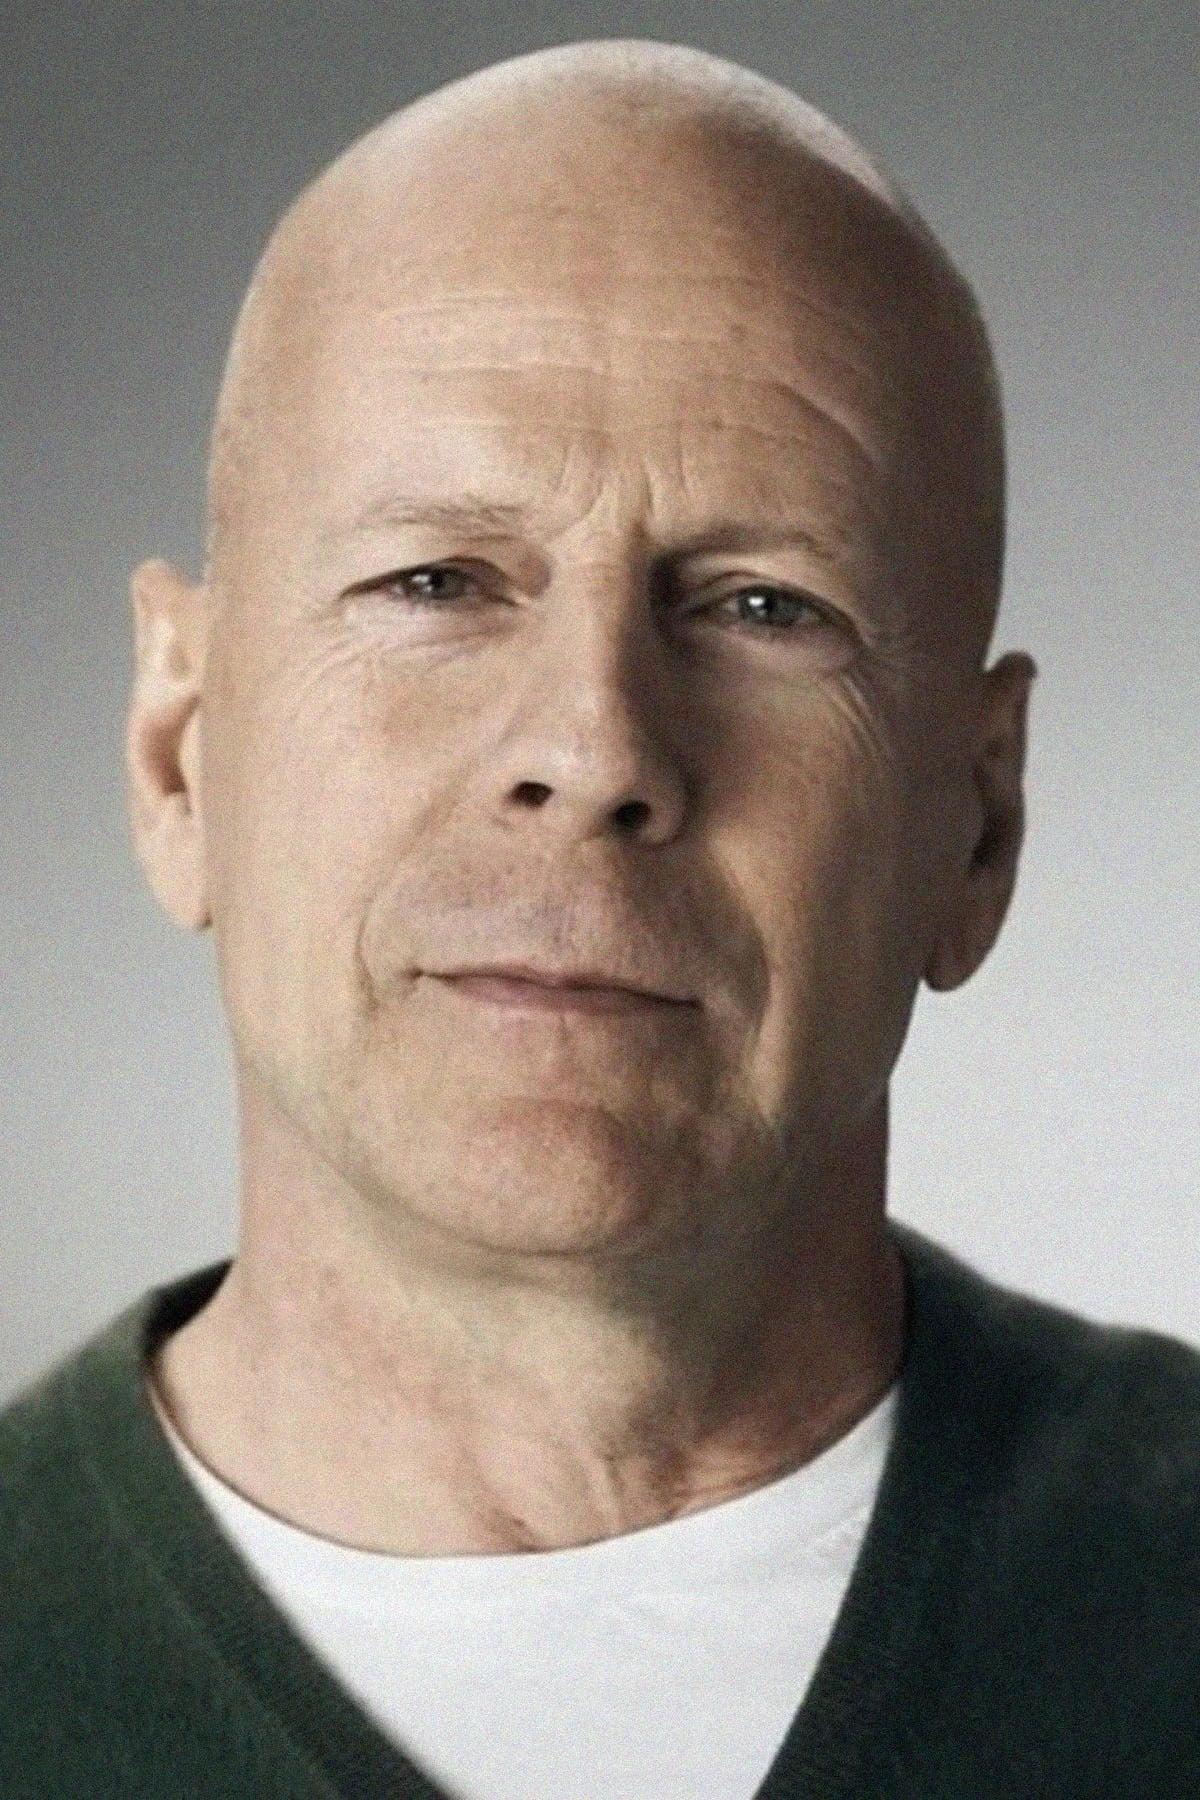 Bruce Willis | Harry S. Stamper